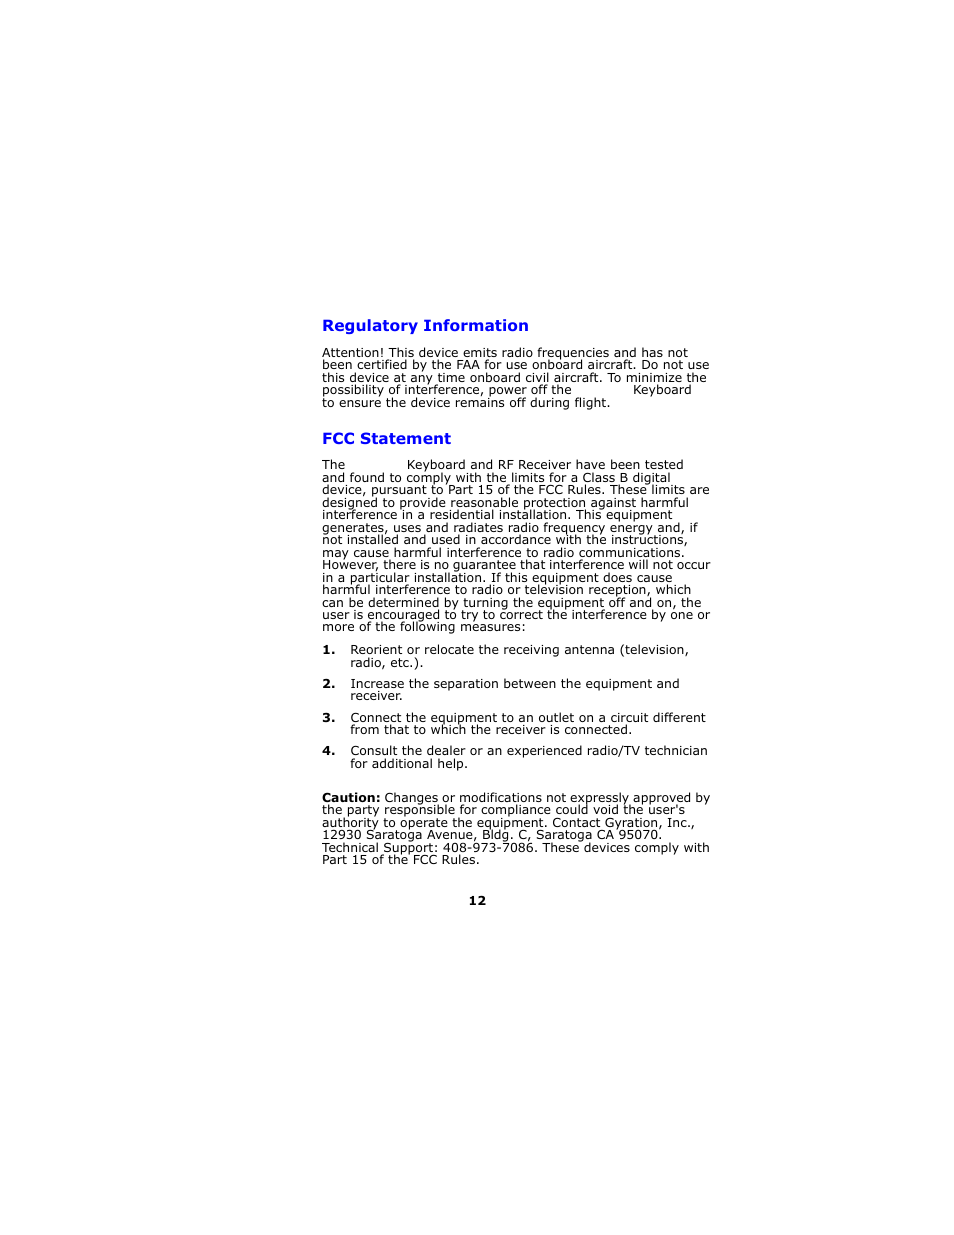 Regulatory information, Fcc statement | Gyration Full-Size Keyboard User Manual | Page 15 / 19